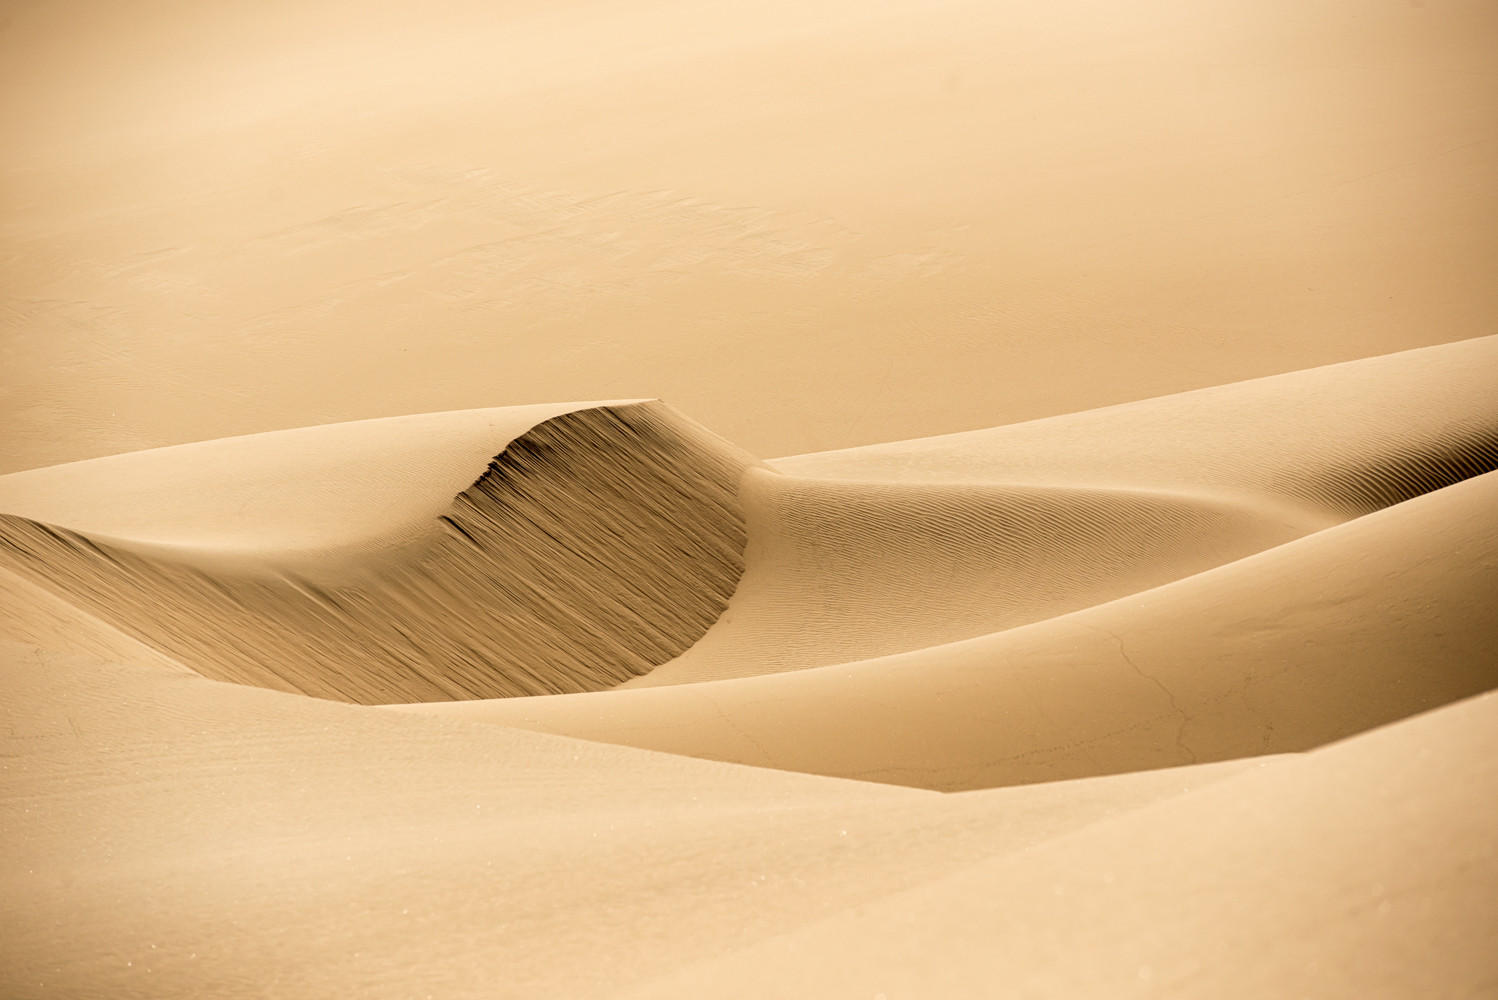 La Femme : Namibia, The Land of Dunes : ELIZABETH SANJUAN PHOTOGRAPHY